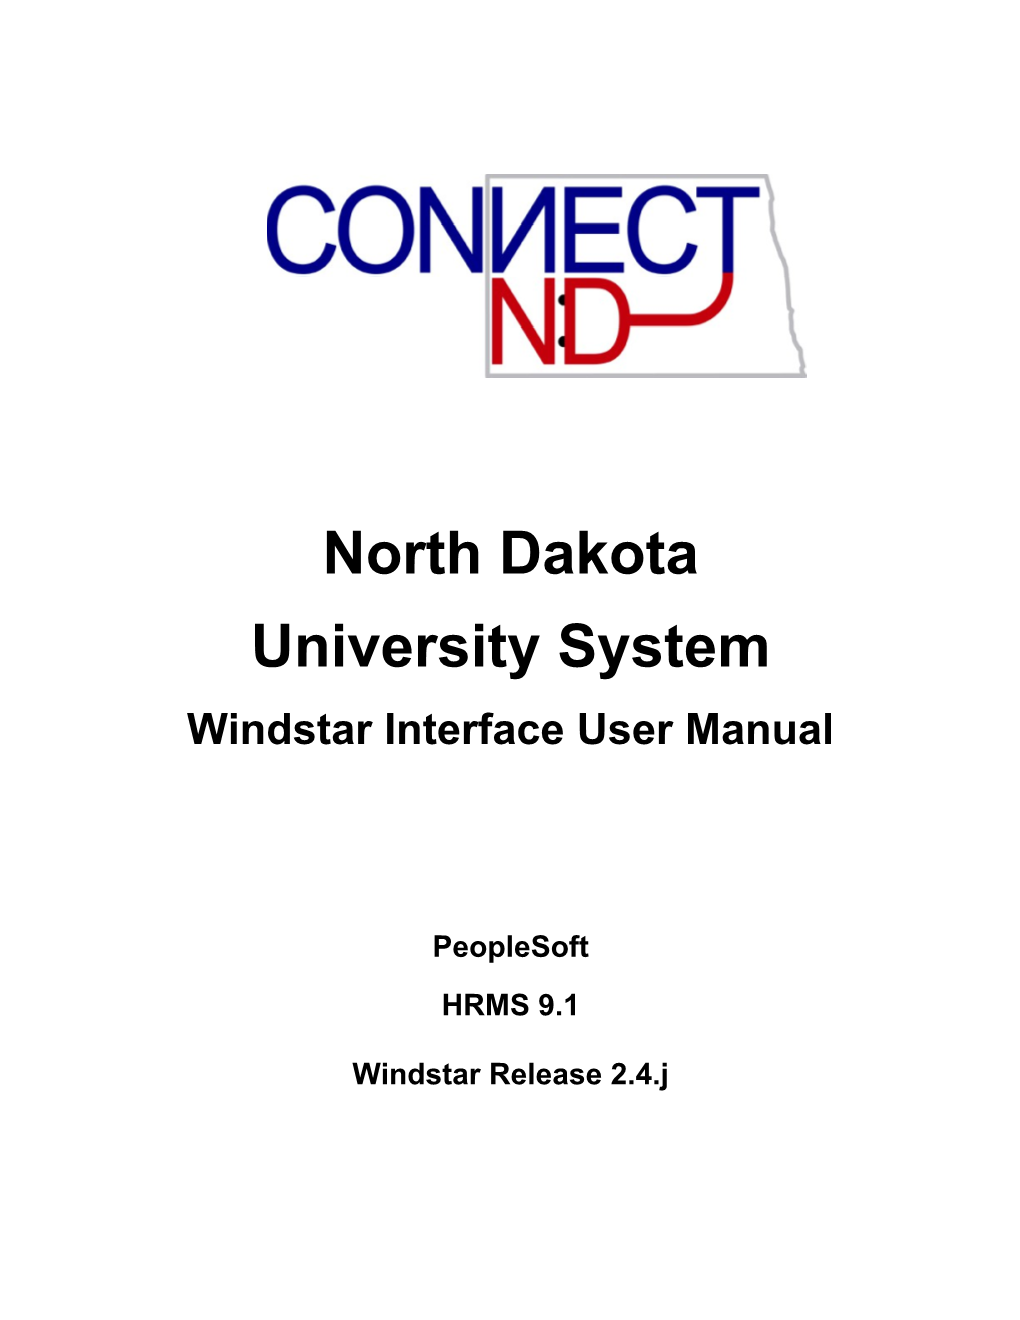 Windstar Interface User Manual